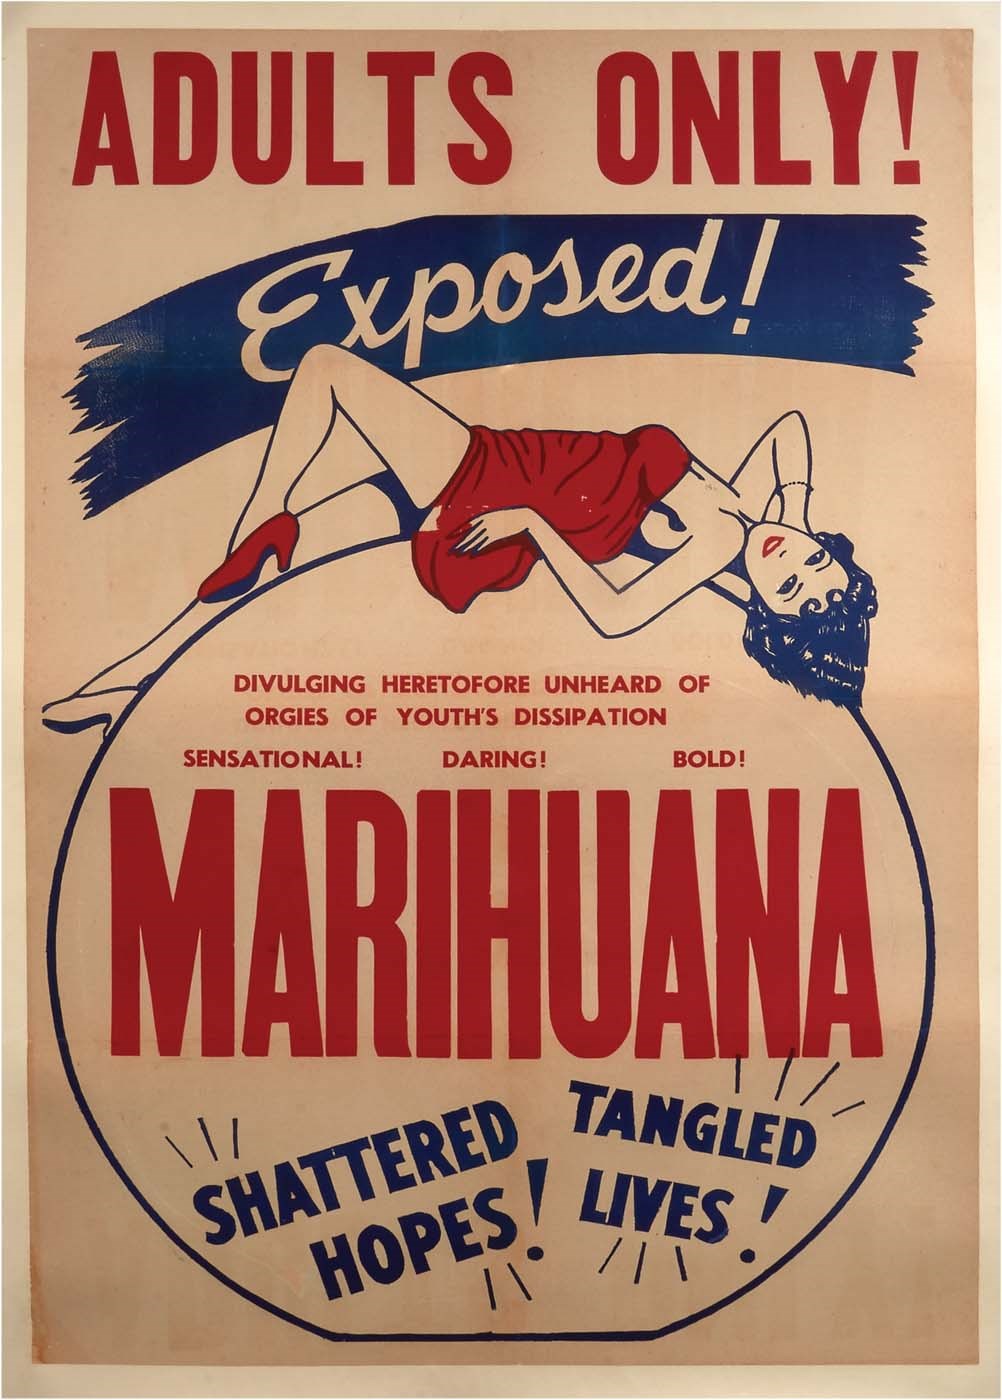 Rock And Pop Culture - 1936 "Marihuana" Film Poster